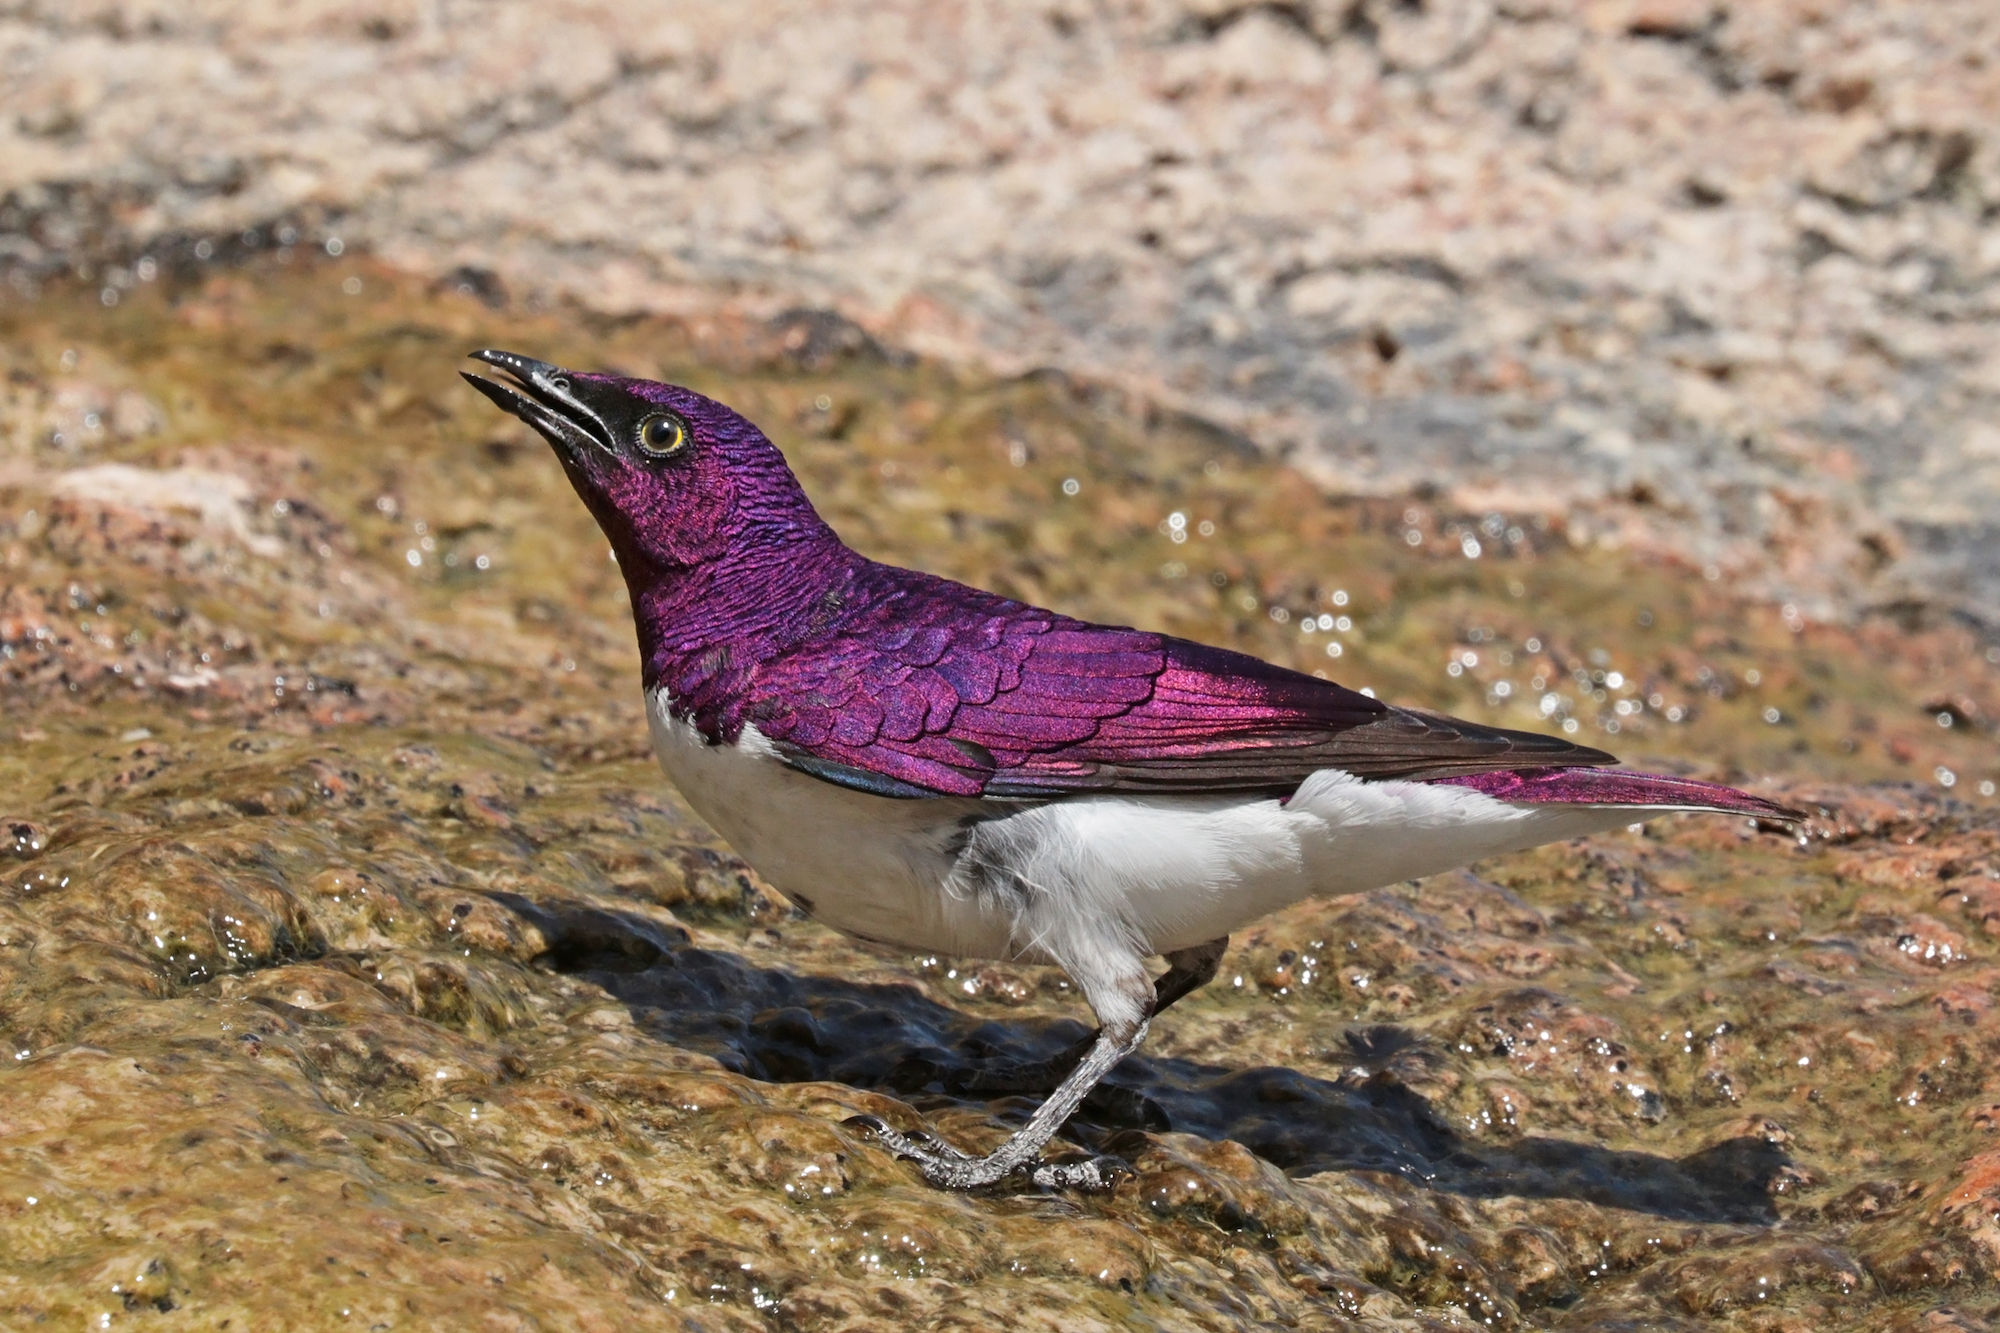 Close up of a purple bird